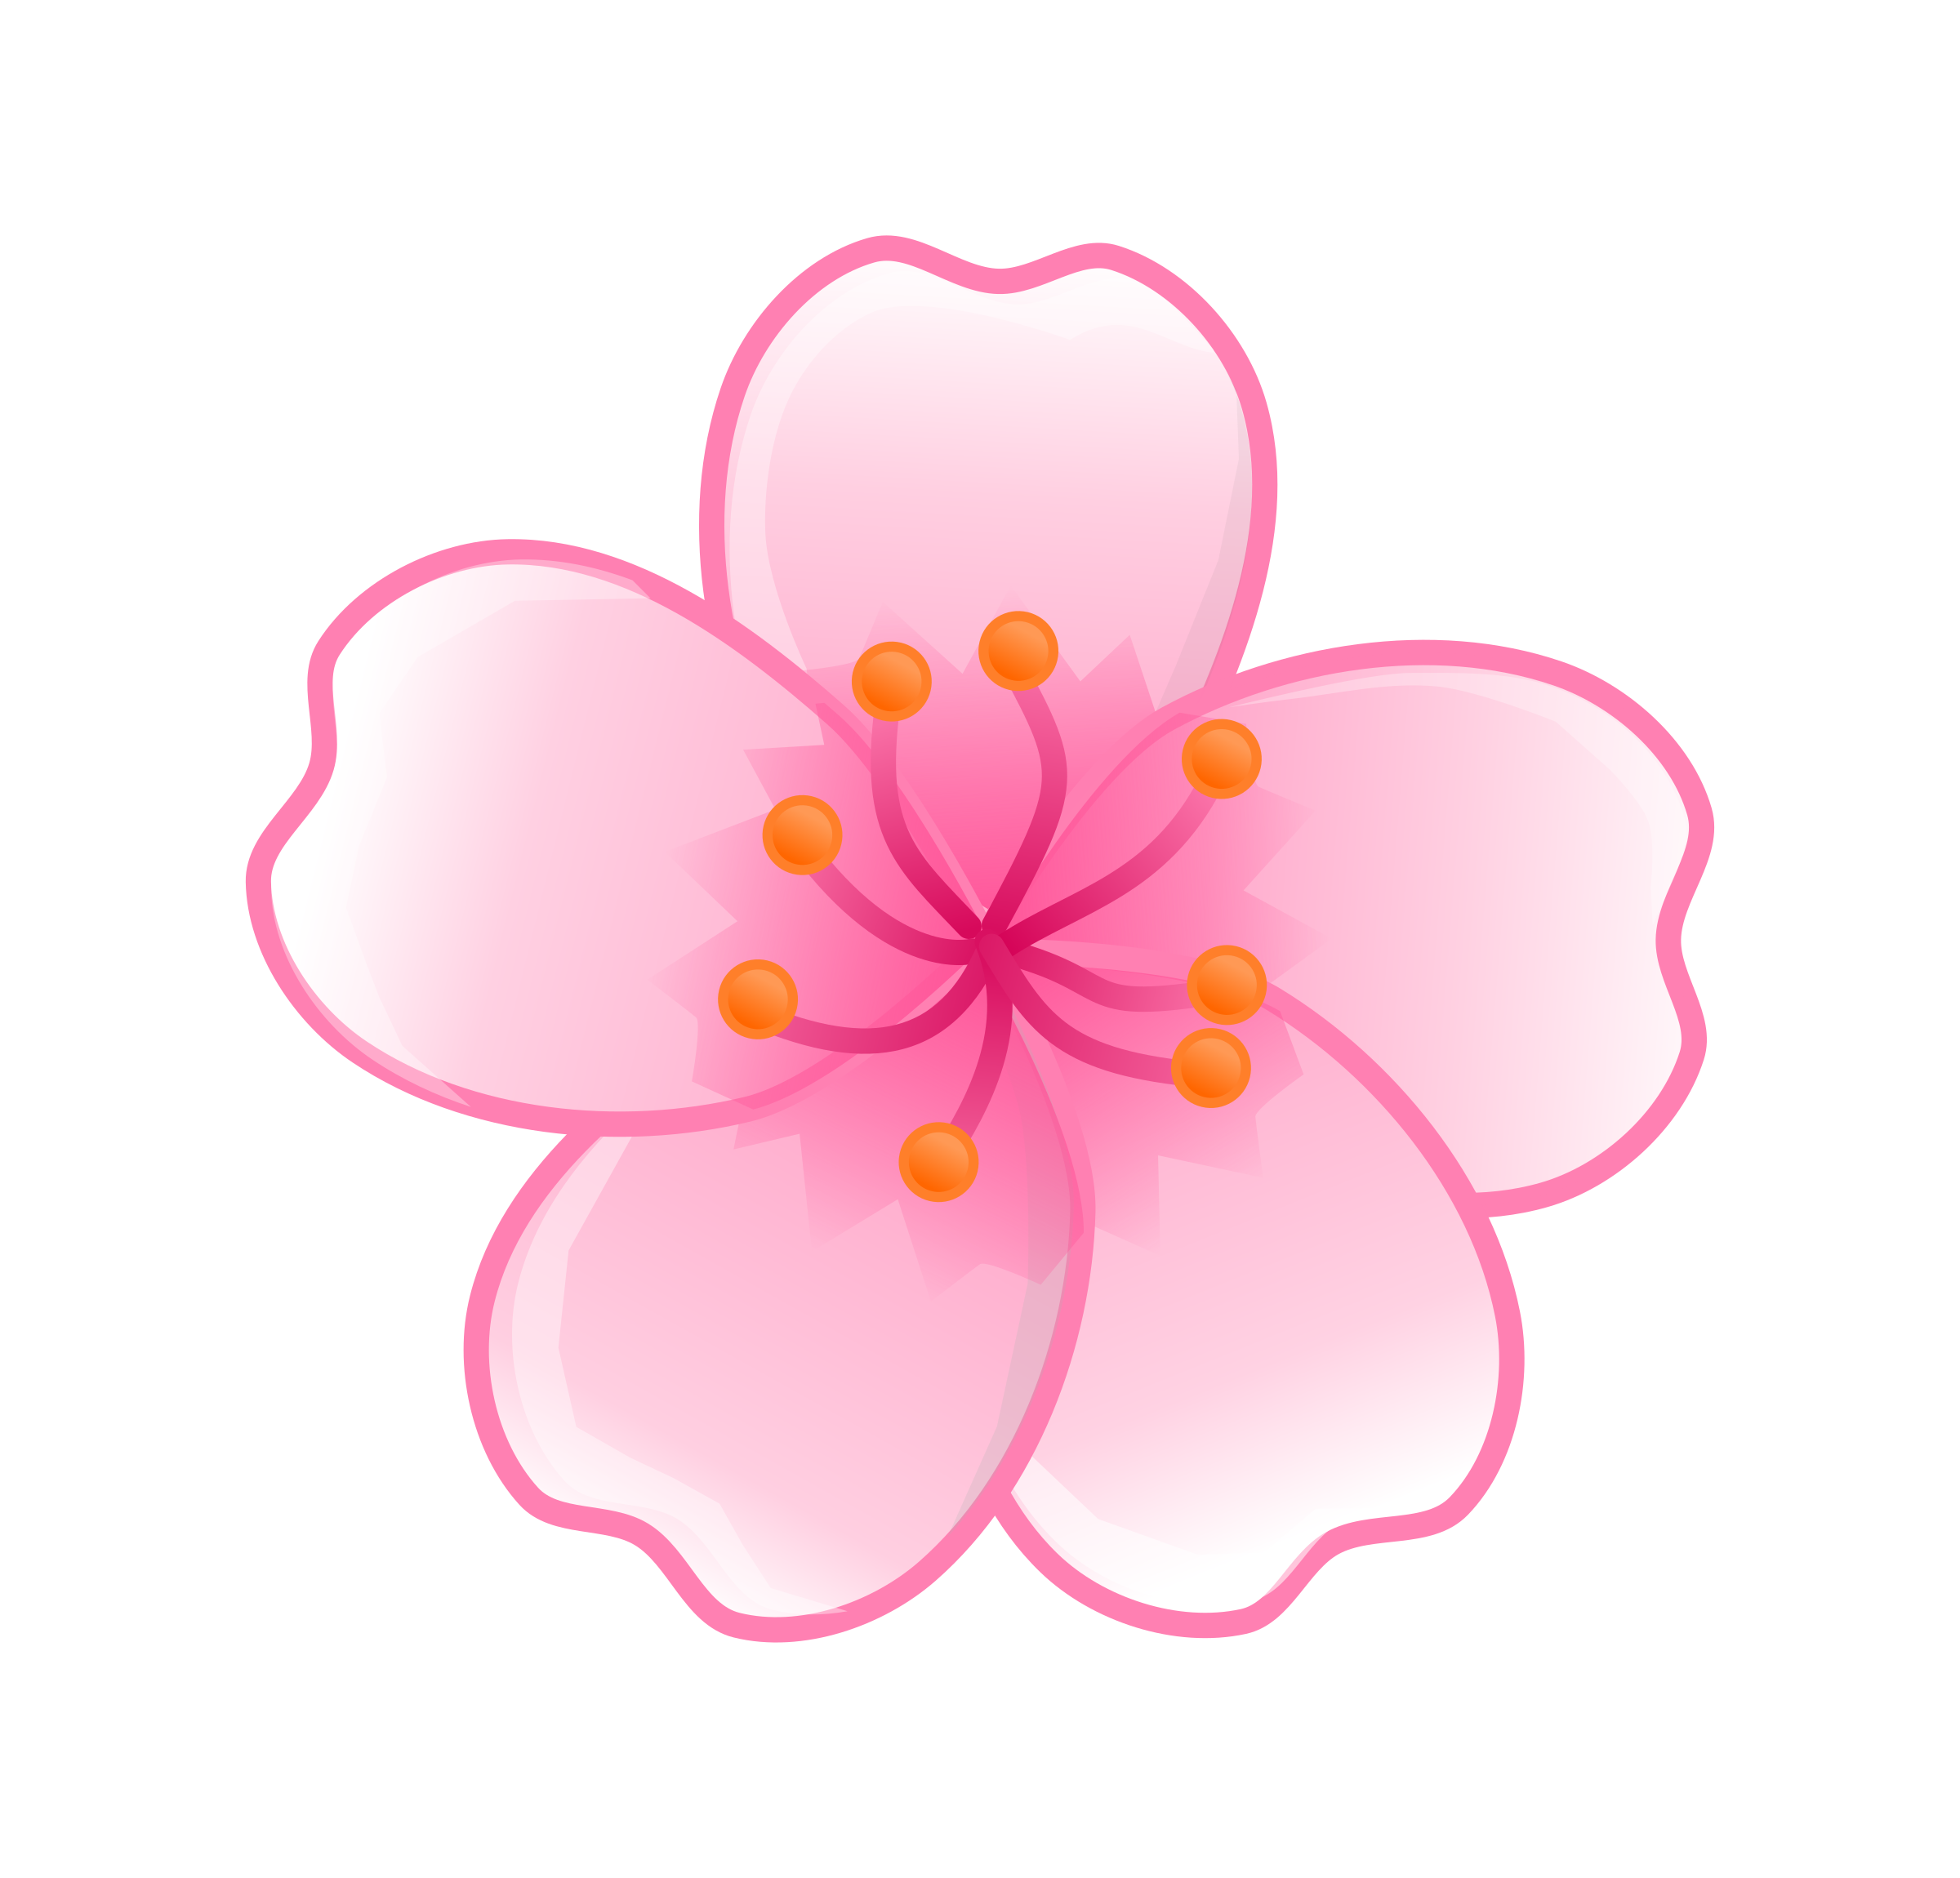 Cherry Blossomflower Cartoon Logo Image for Free - Free Logo Image